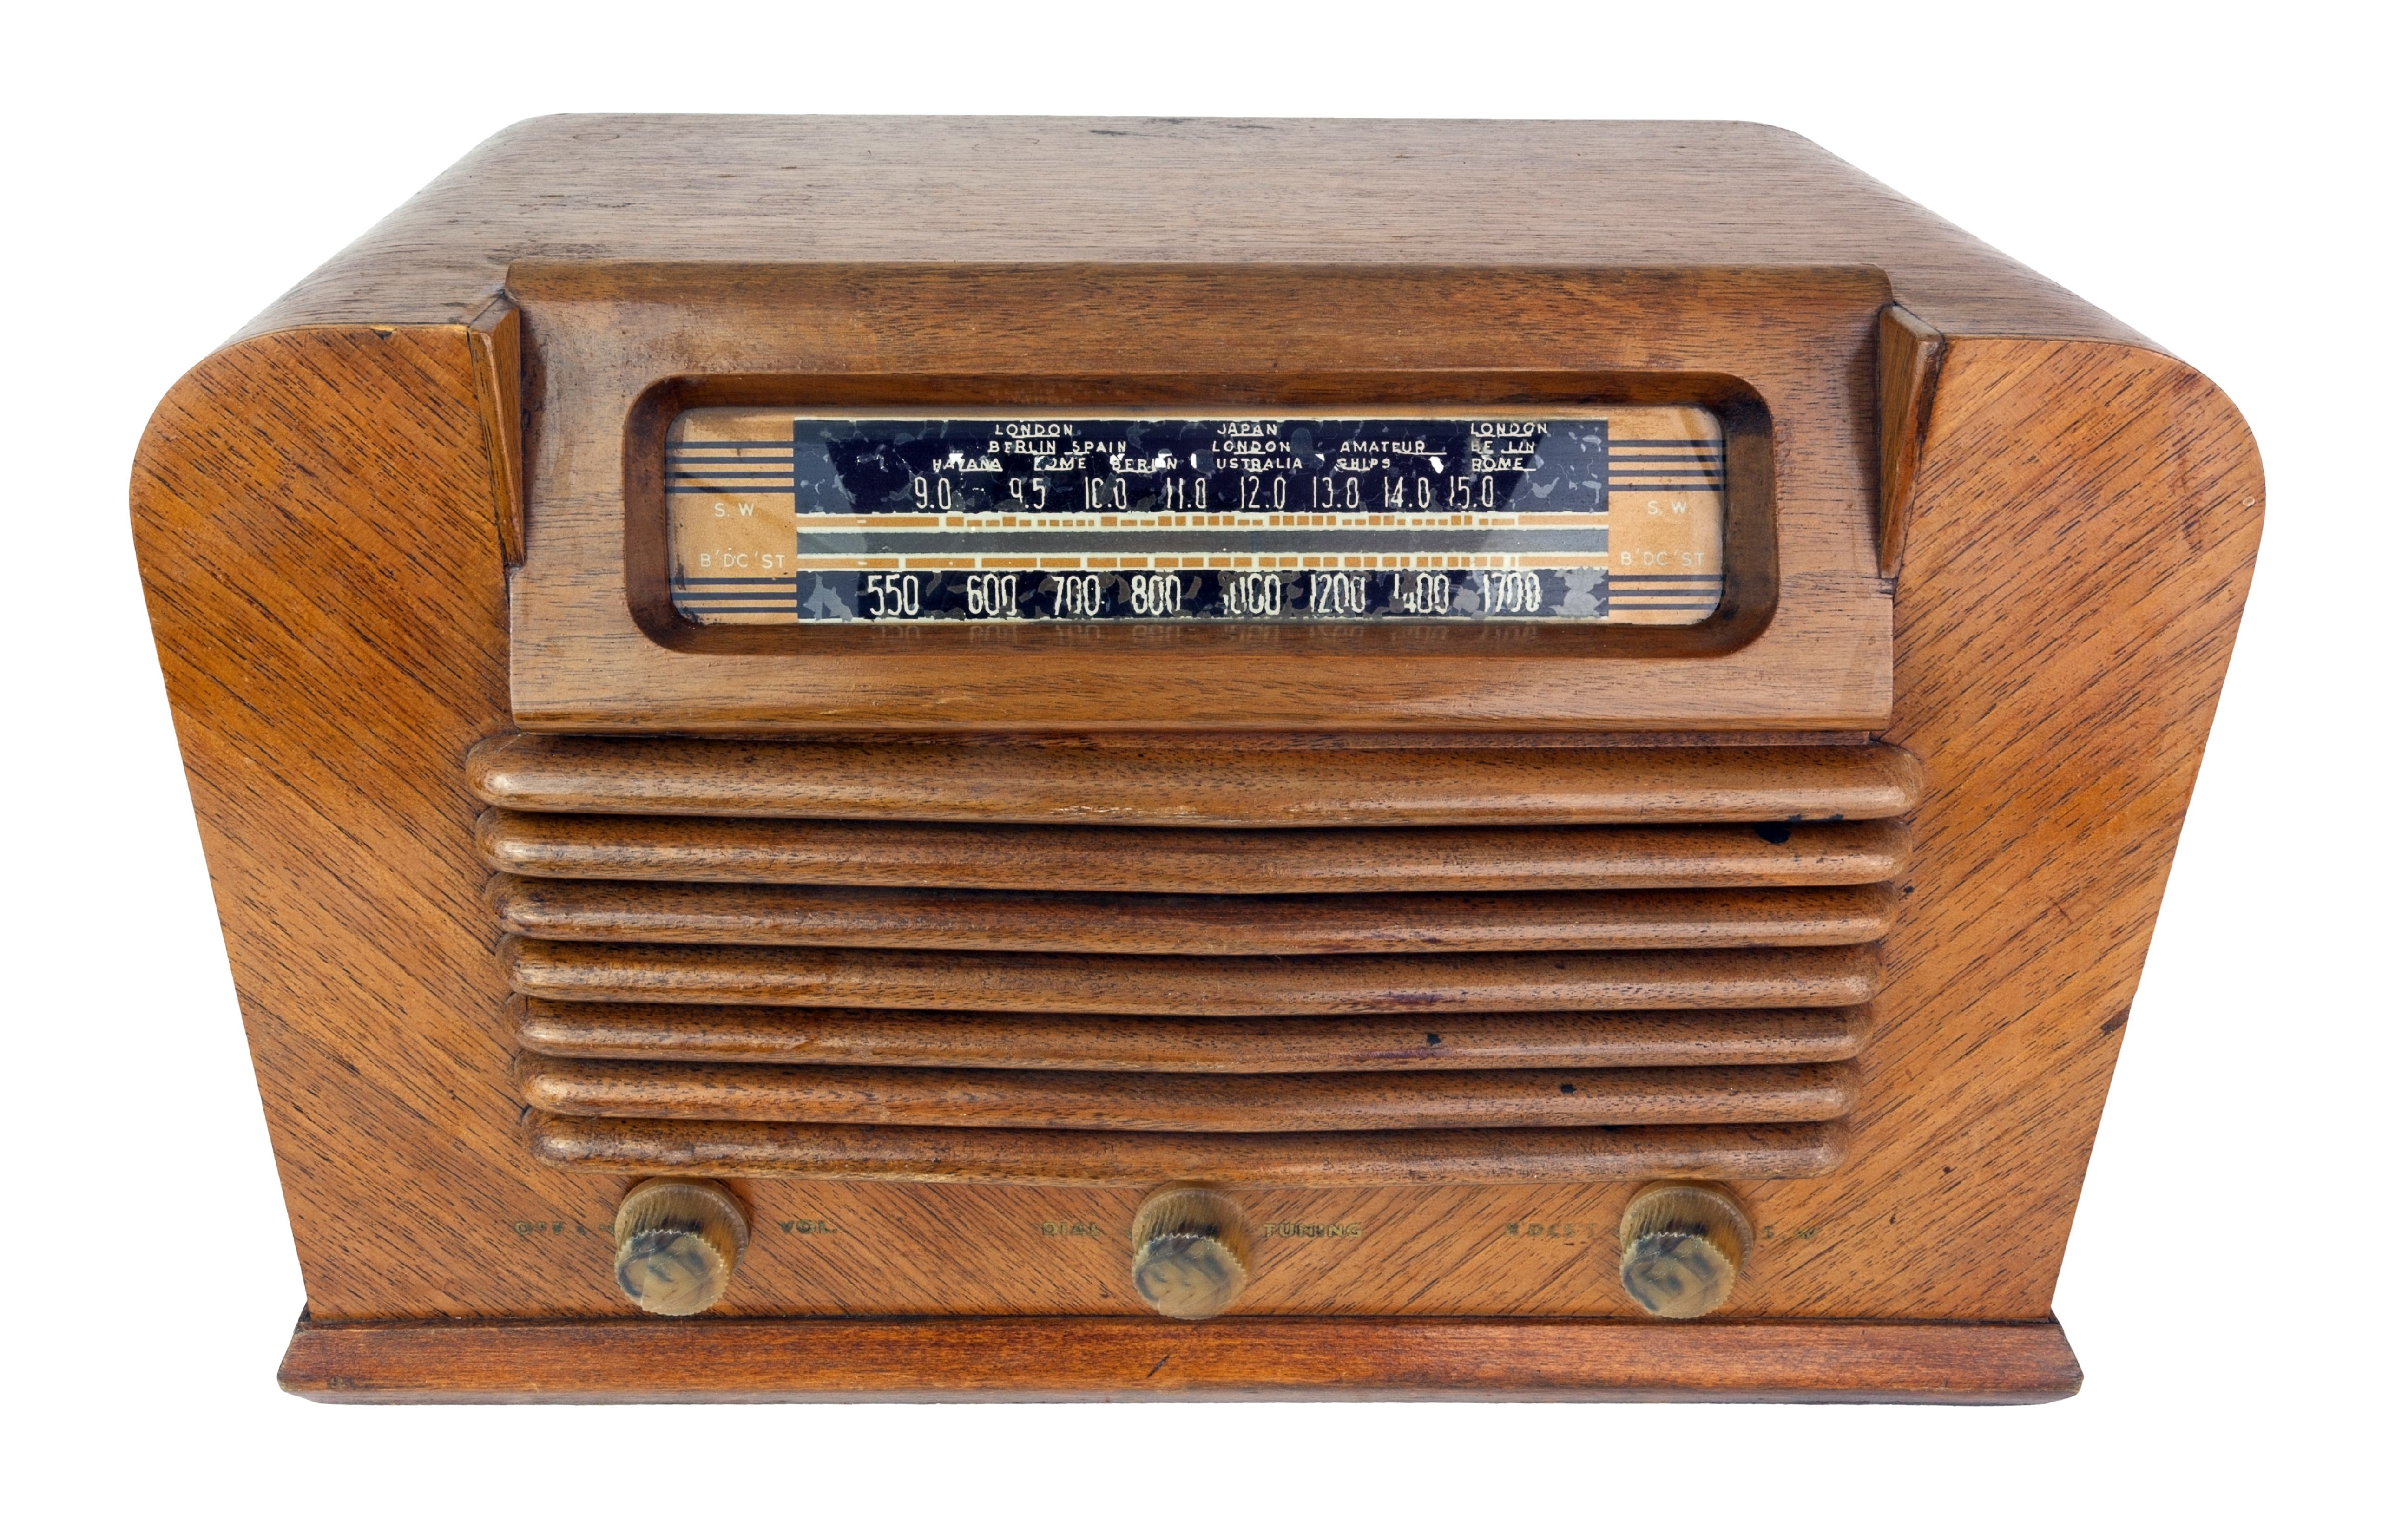 History of Analogue Radio